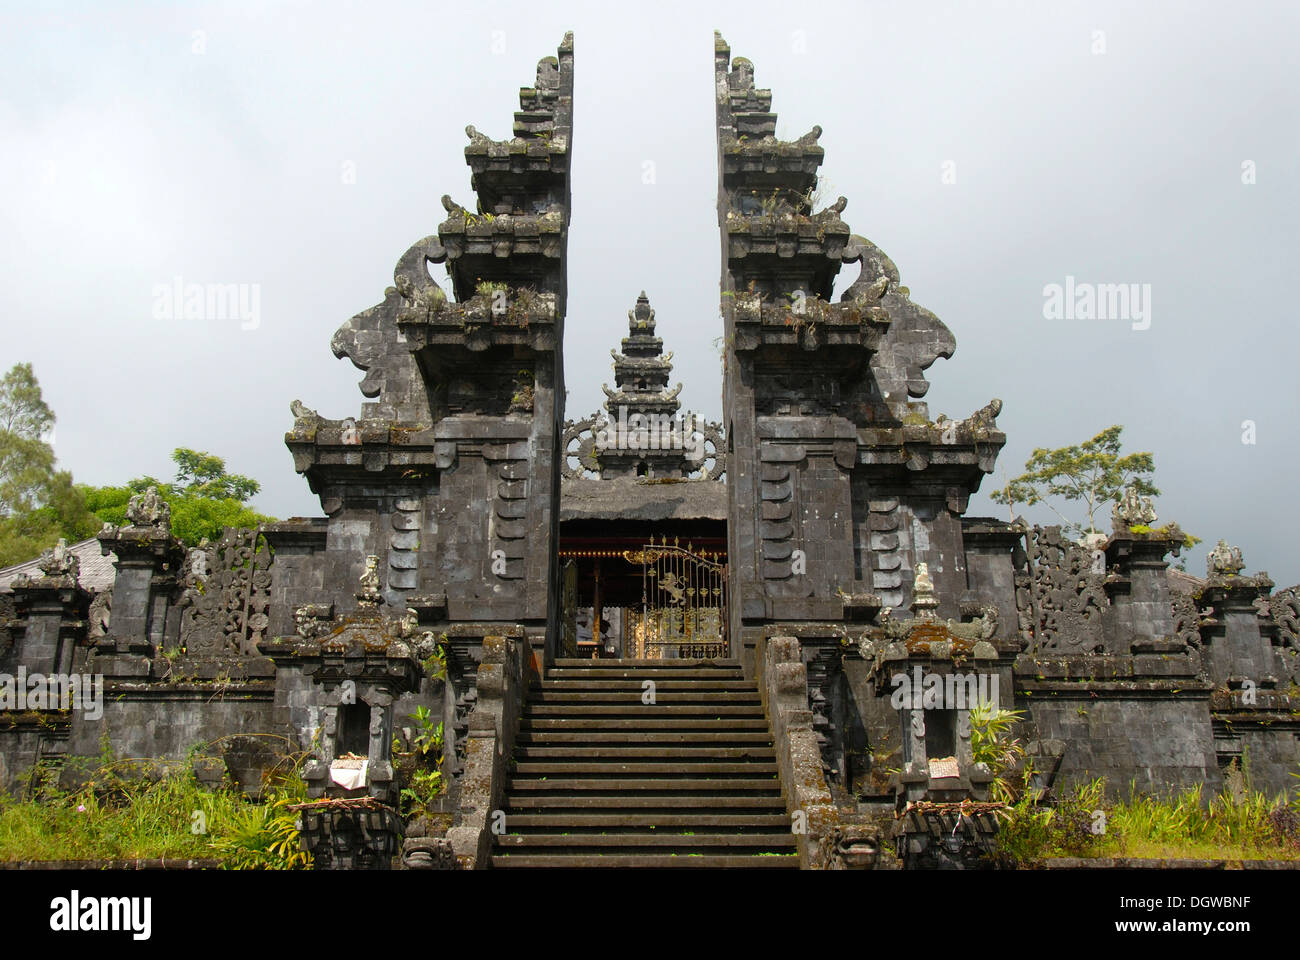 Balinese Hinduism, sanctuary, stairs, split gate, Candi bentar, mother temple, Pura Besakih temple, Bali, Indonesia Stock Photo